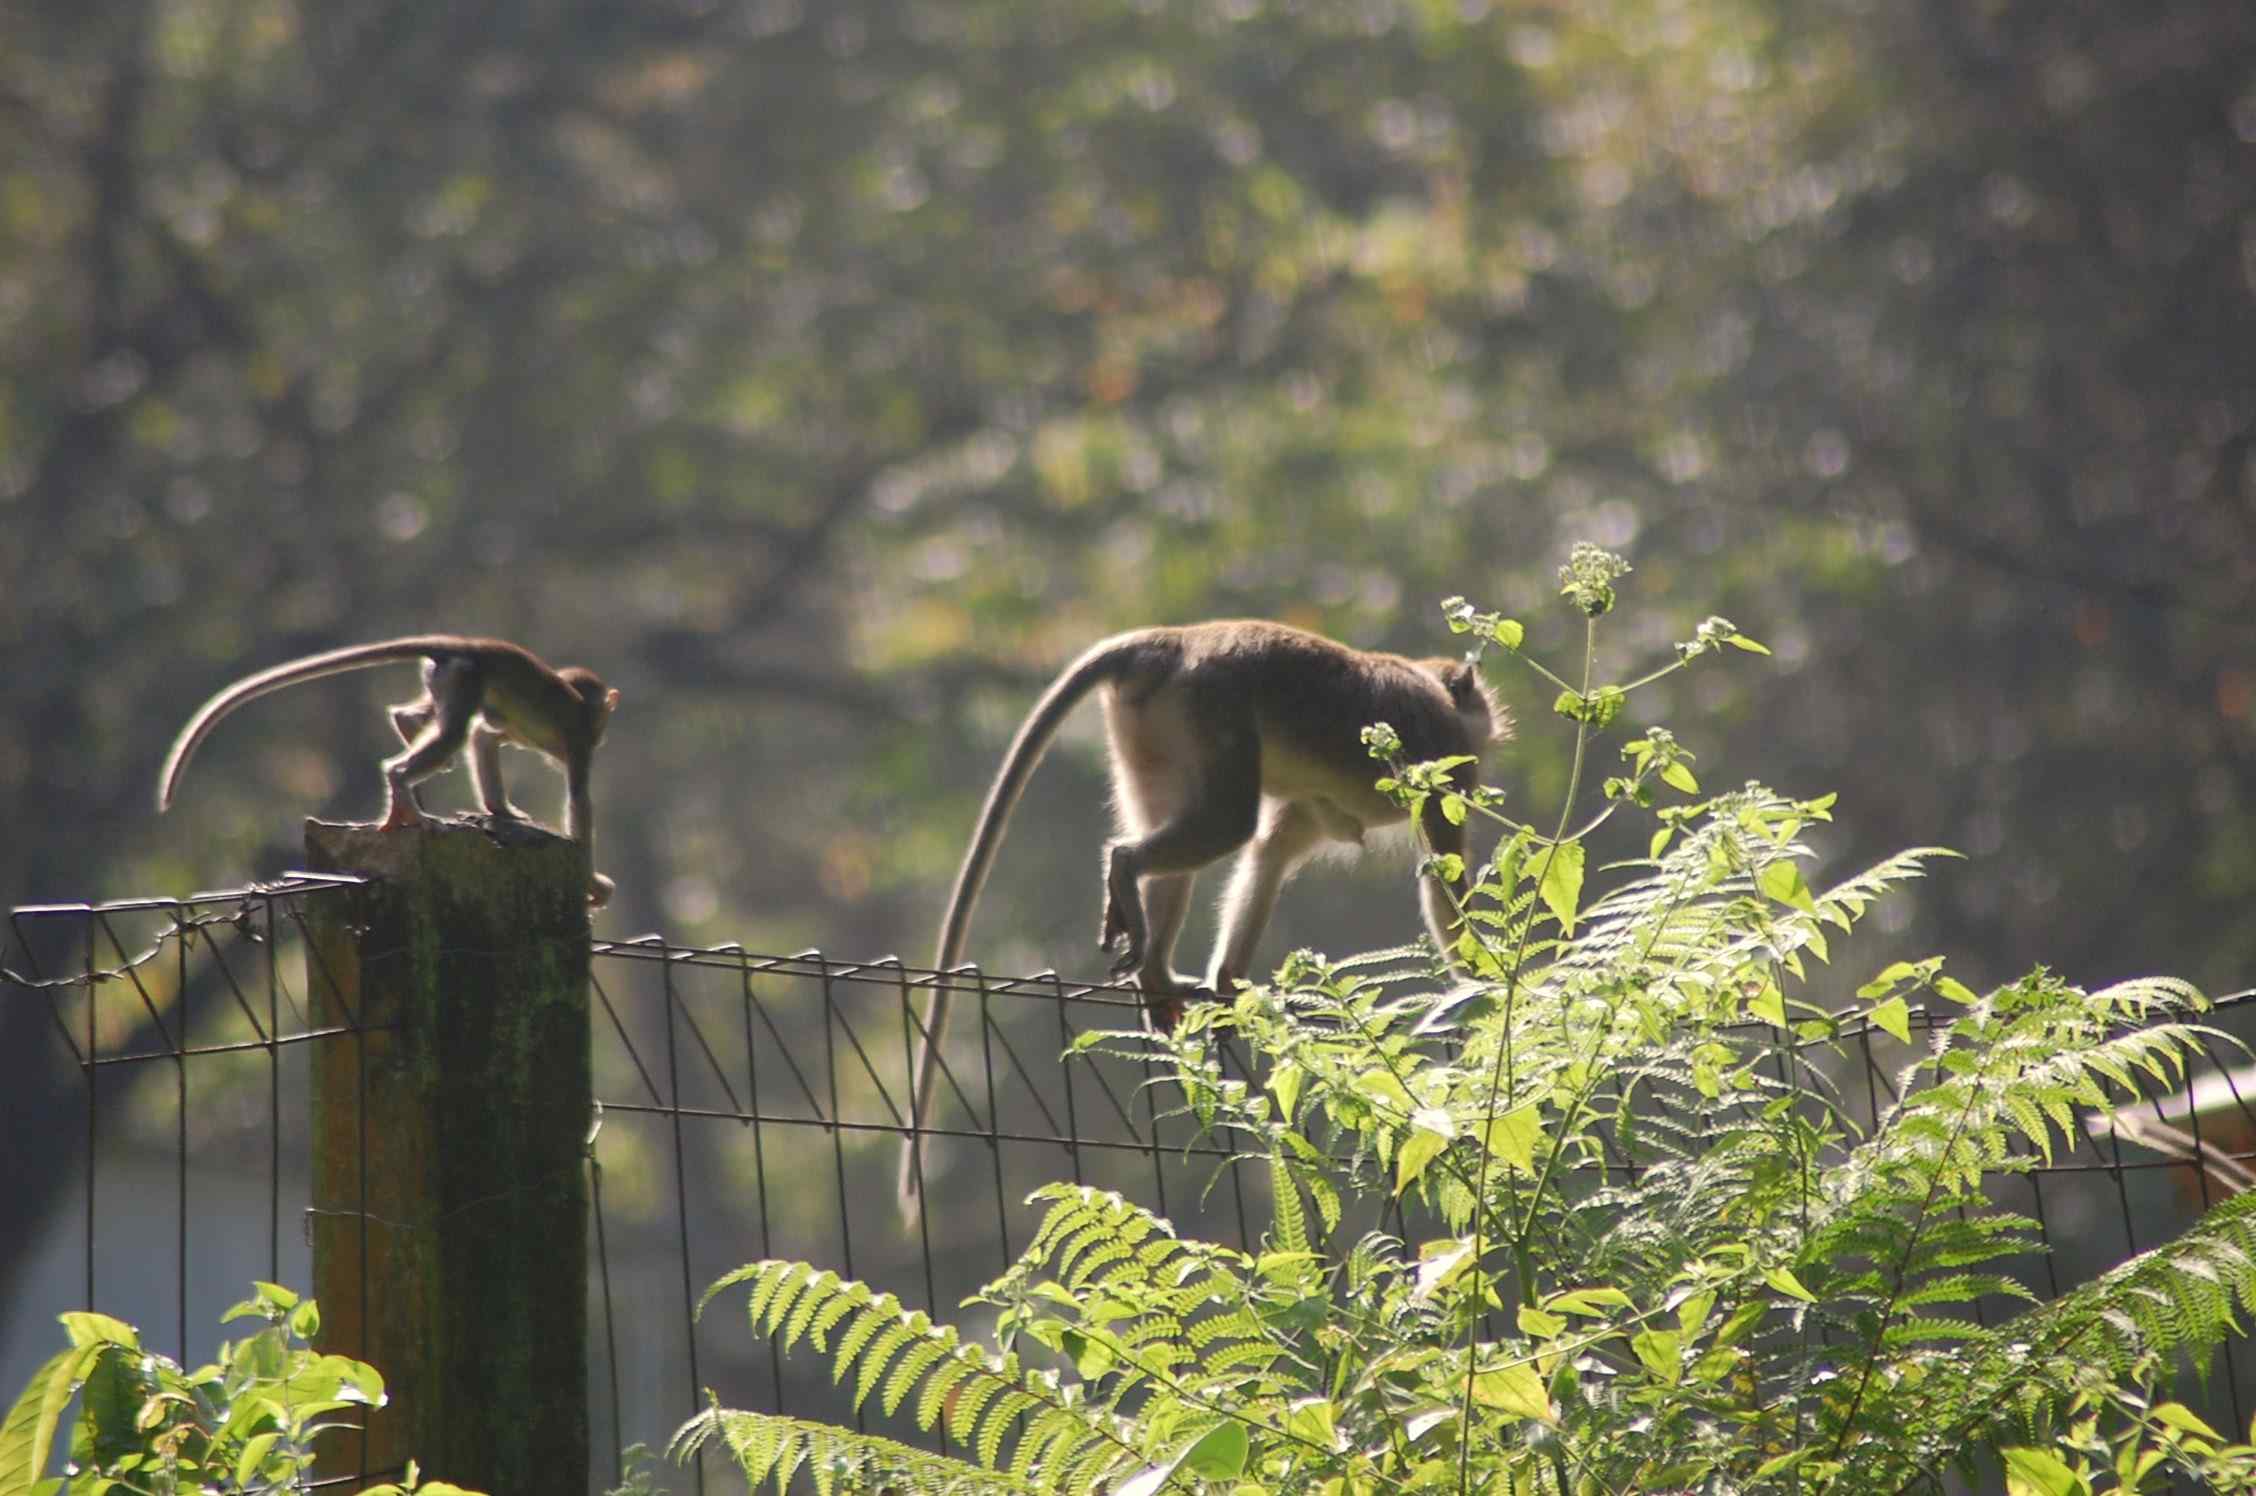 Monkeys on Fence